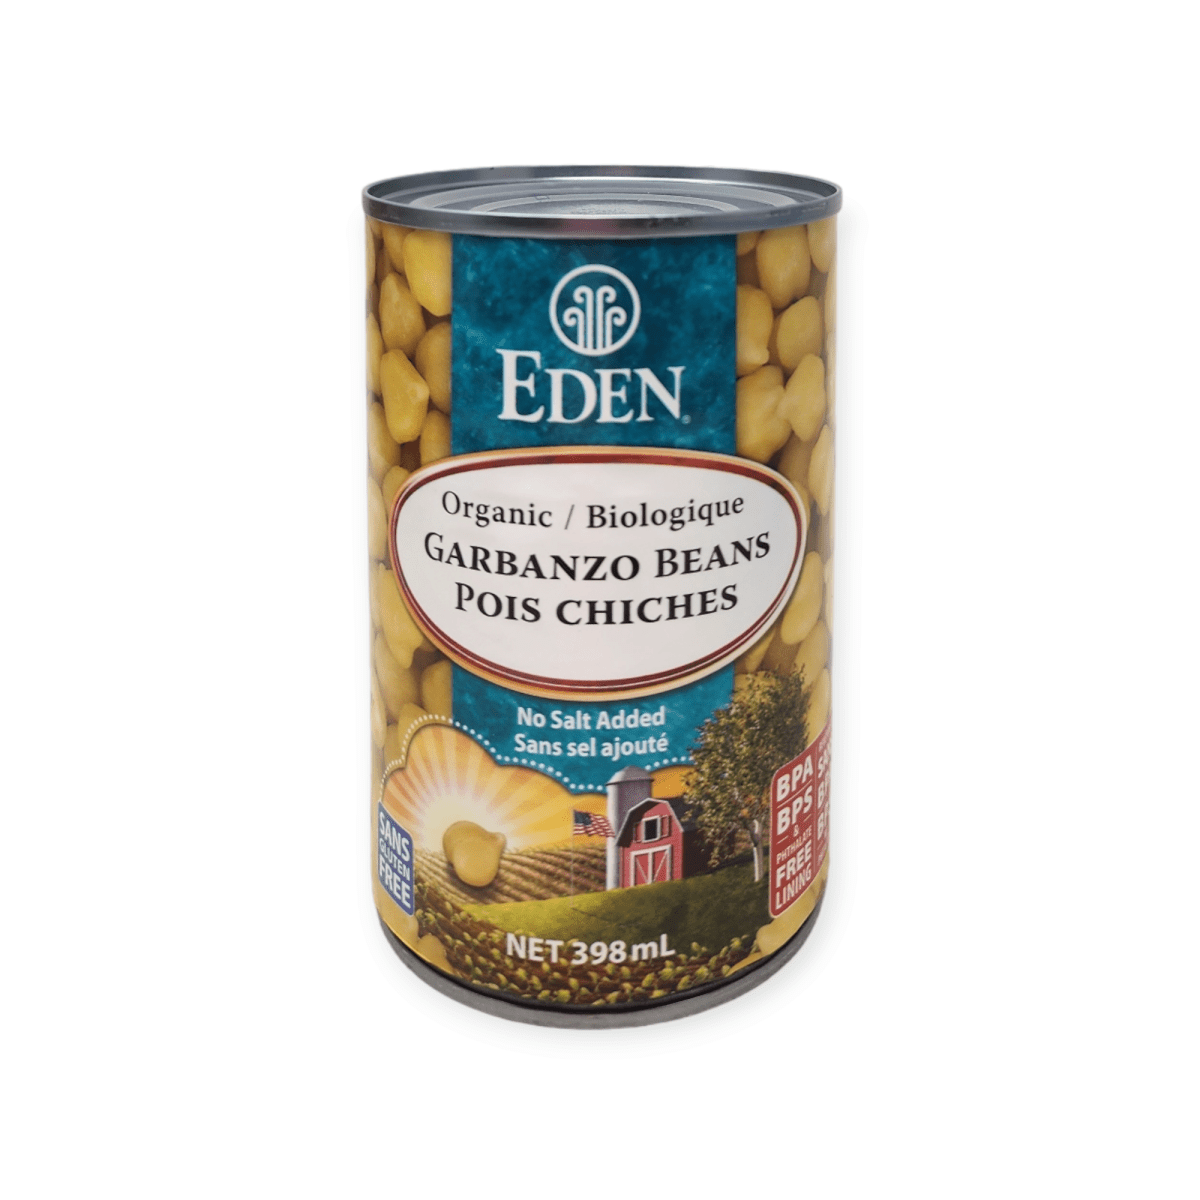 Eden Organic Garbanzo Beans No Salt Added (398mL)